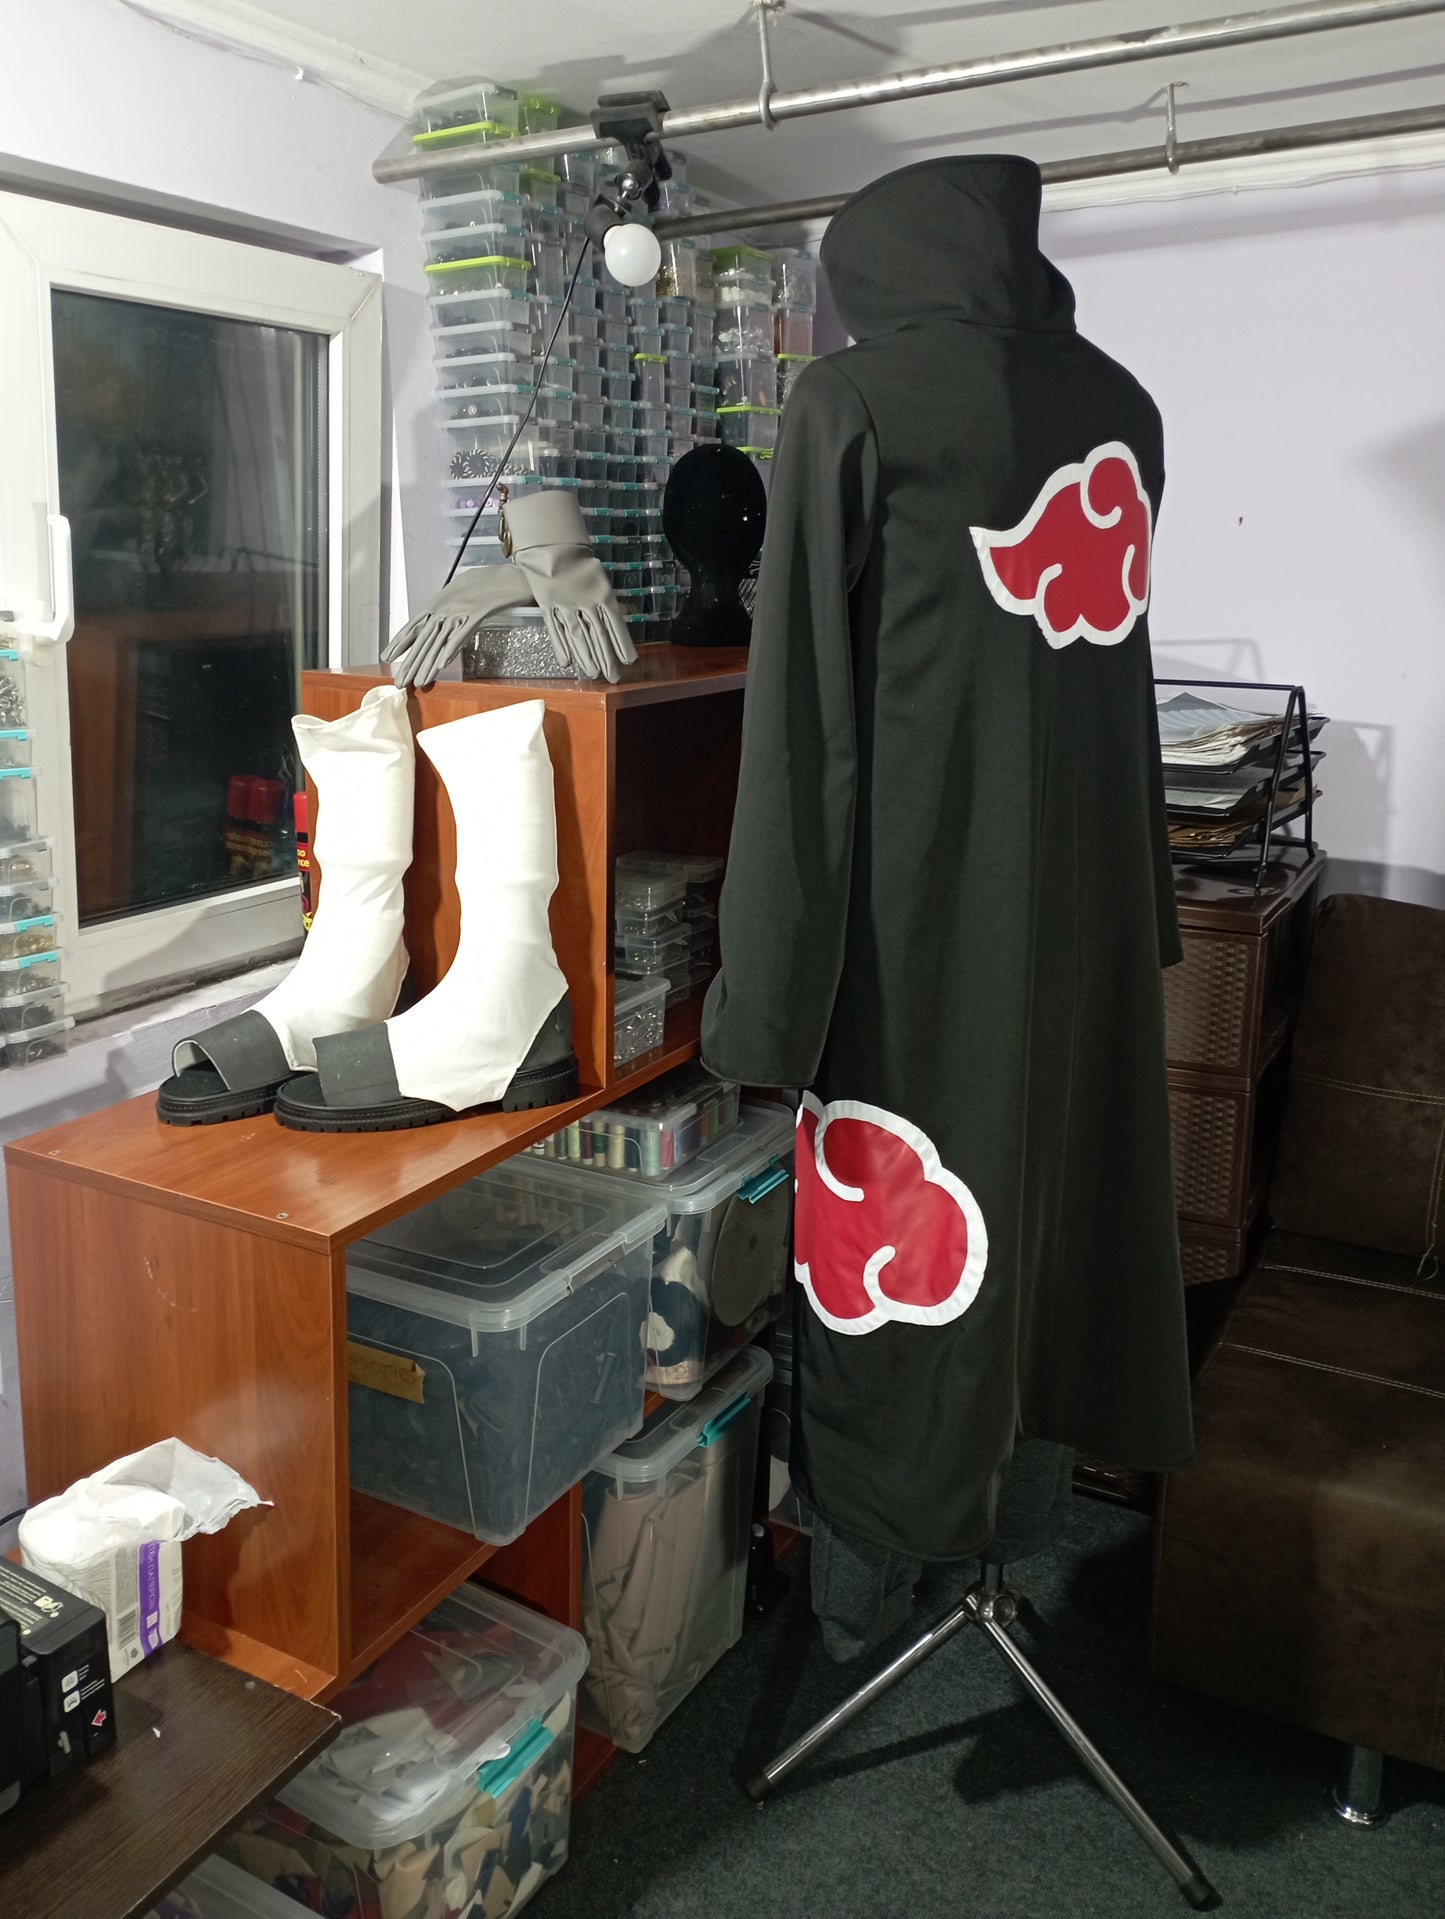 Naruto Akatsuki Tobi cosplay outfit